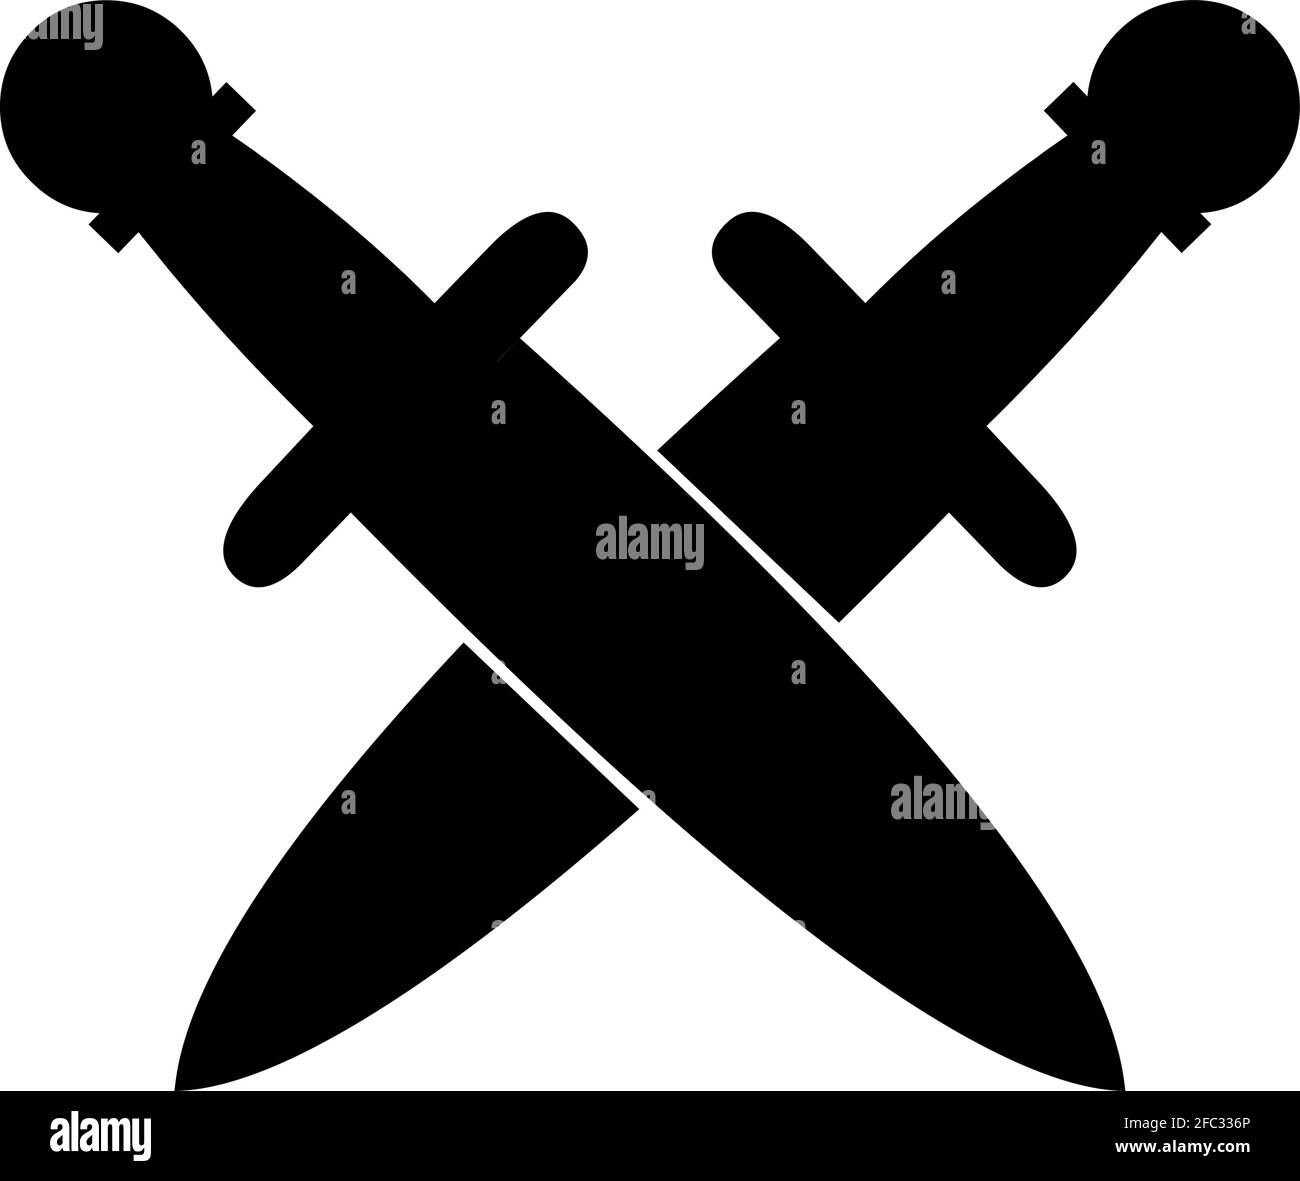 Vector illustration of crossed swords symbol Stock Vector